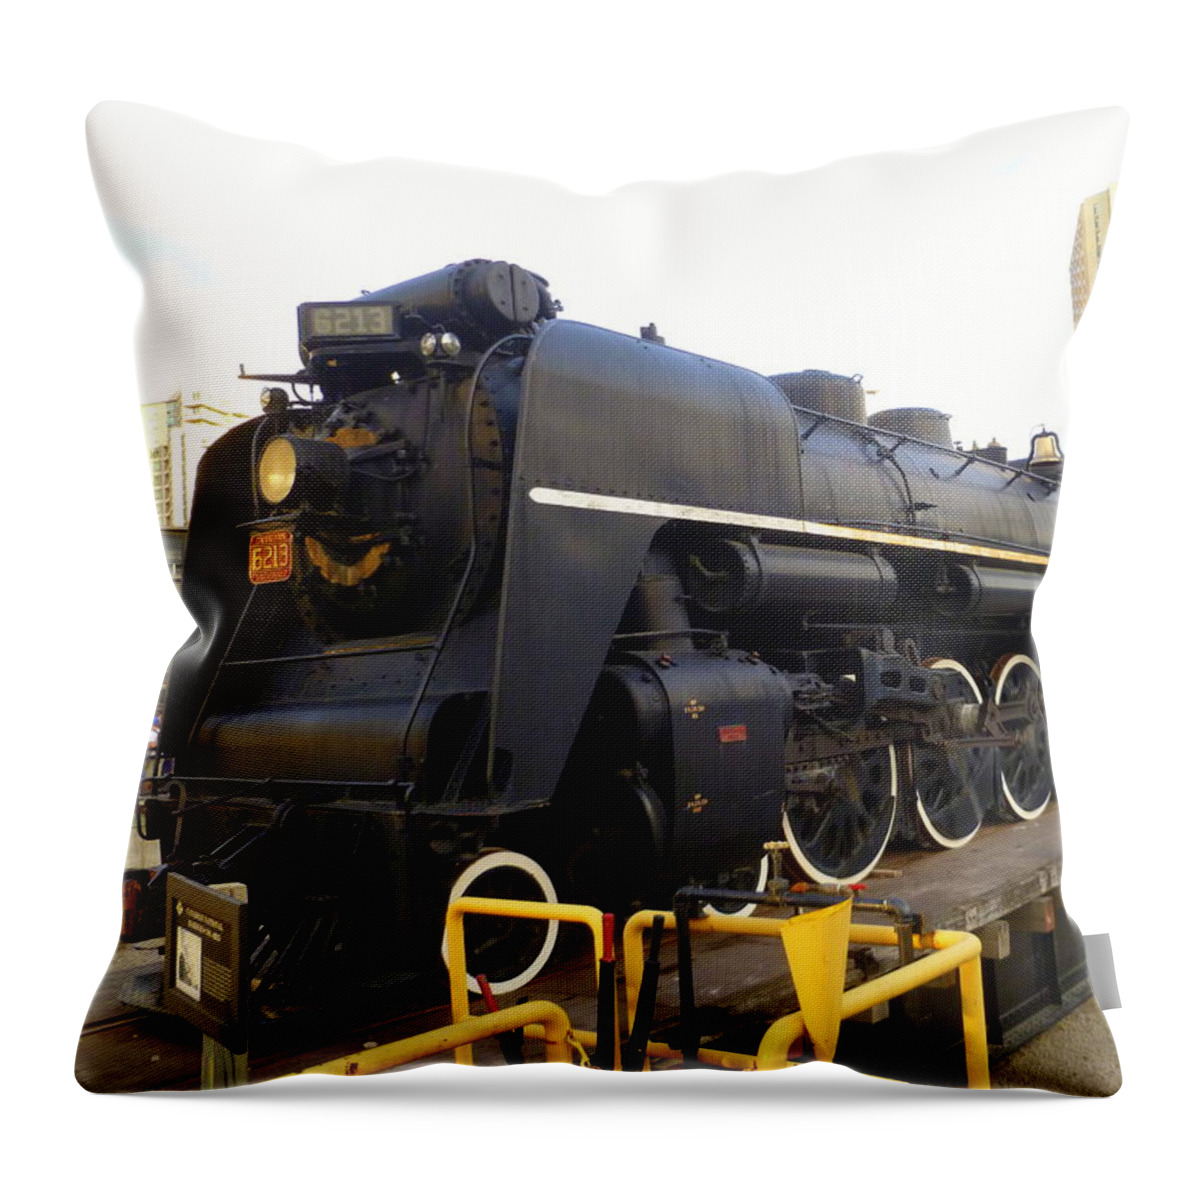 Locomotive Throw Pillow featuring the photograph Canadian National No. 6213 by Lingfai Leung